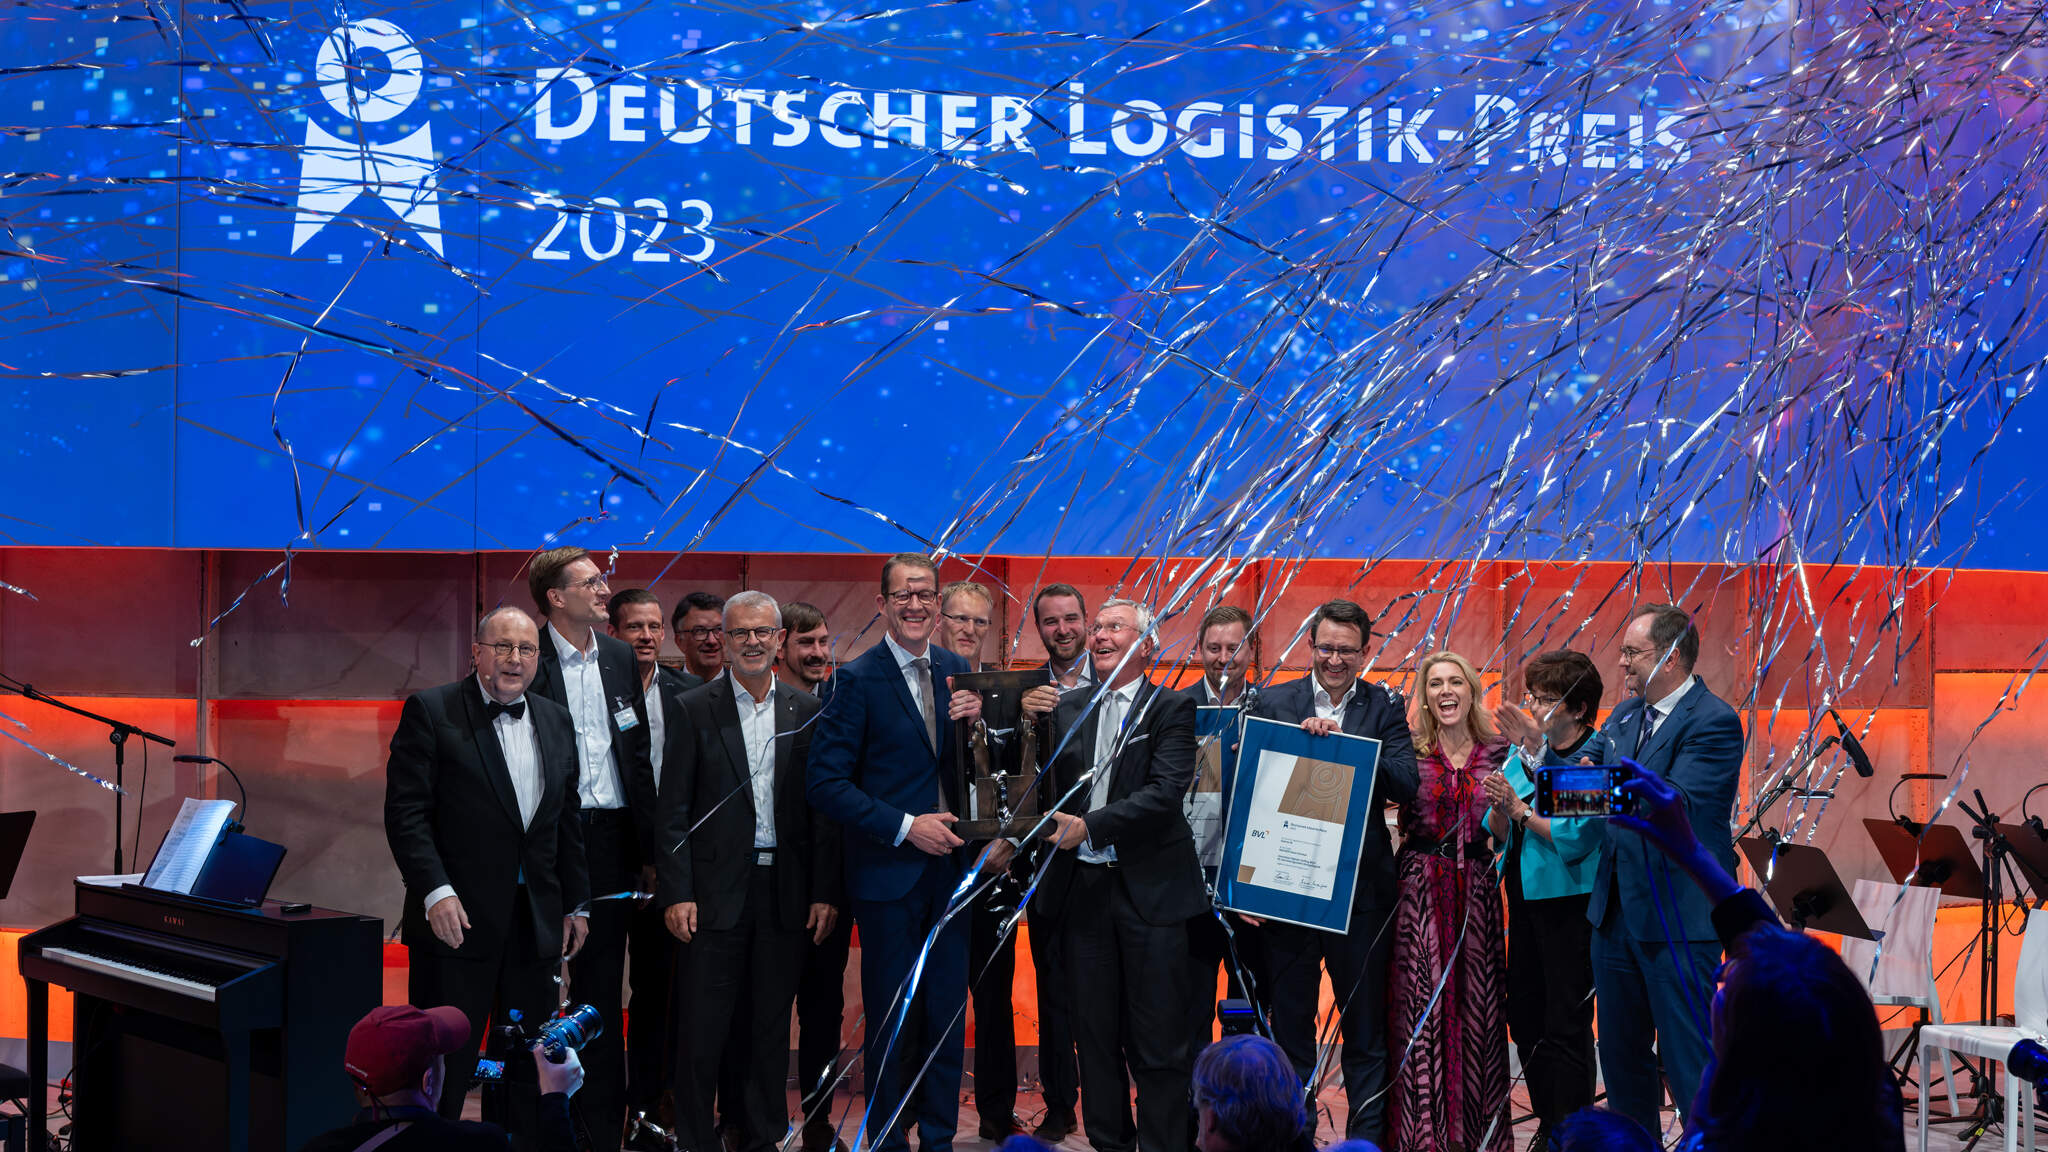 Burkhard Eling, DACHSER CEO, y Prof. Dr. Dr. h.c.. Michael ten Hompel, Executive Director del Fraunhofer IML, reciben el Premio Alemán de Logística junto con los equipos de Fraunhofer IML y DACHSER. Foto: BVL/Bublitz